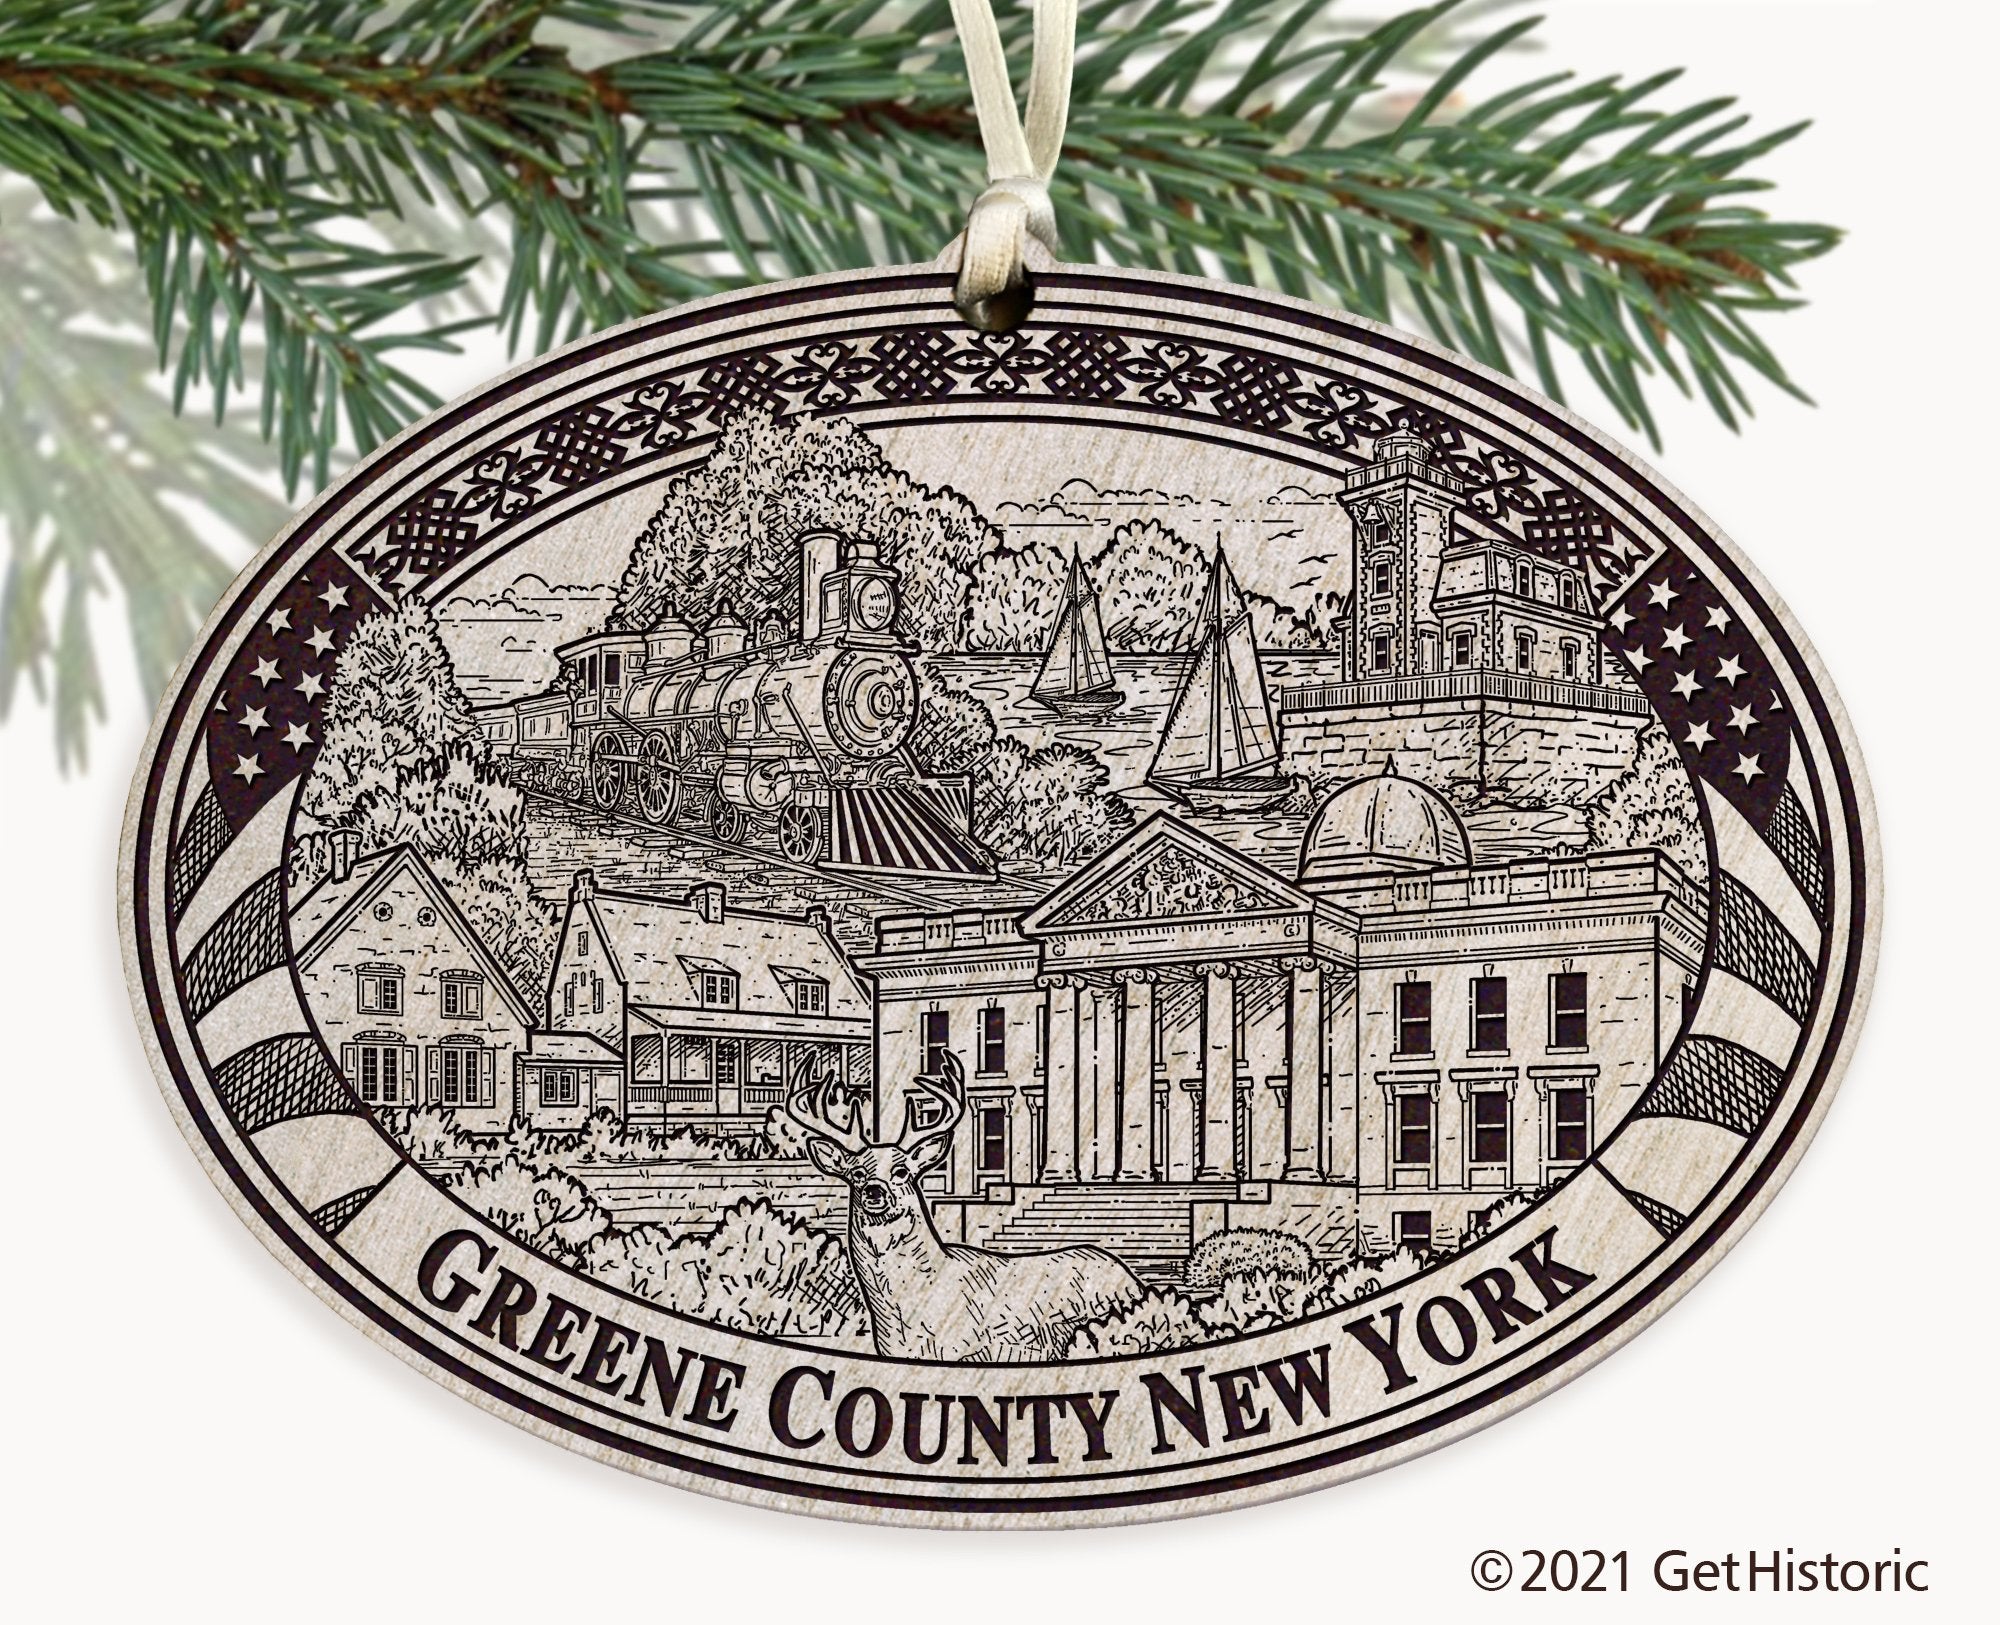 Greene County New York Engraved Ornament